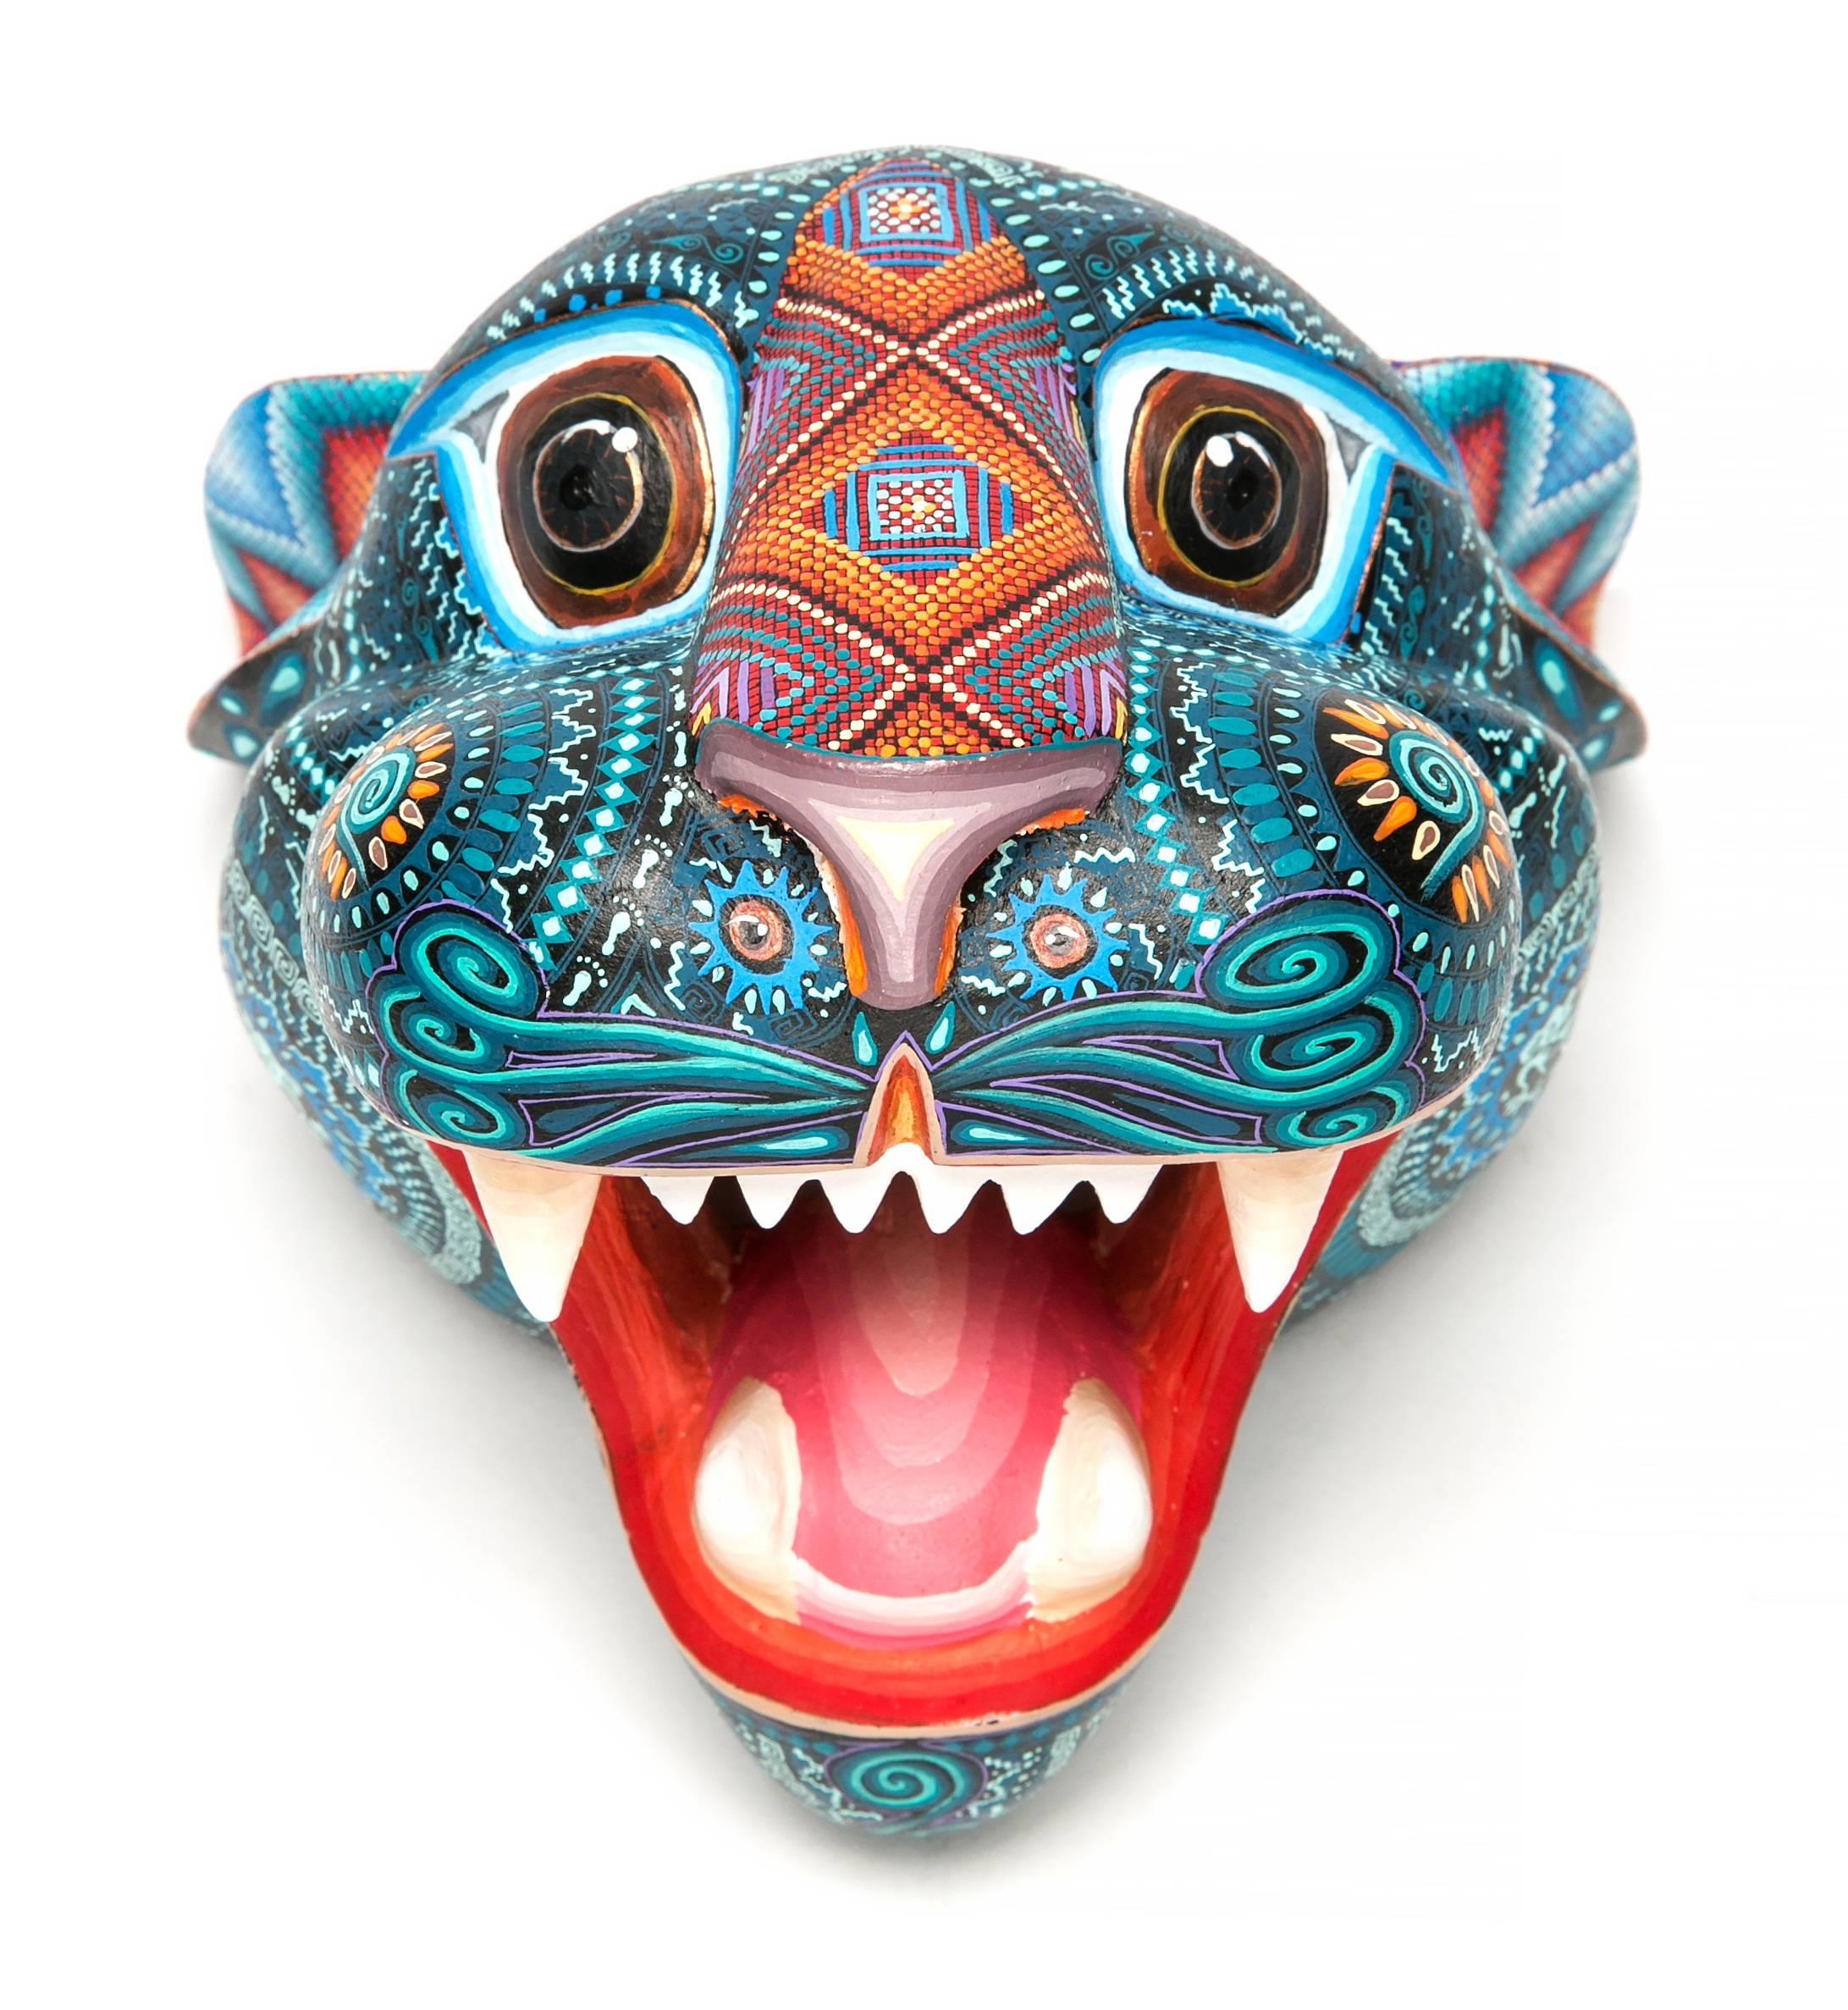 Taller Manuel Jimenez Abstract Sculpture - 5" Mascara Jaguar / Wood carving Alebrije Mexican Folk Art Sculpture